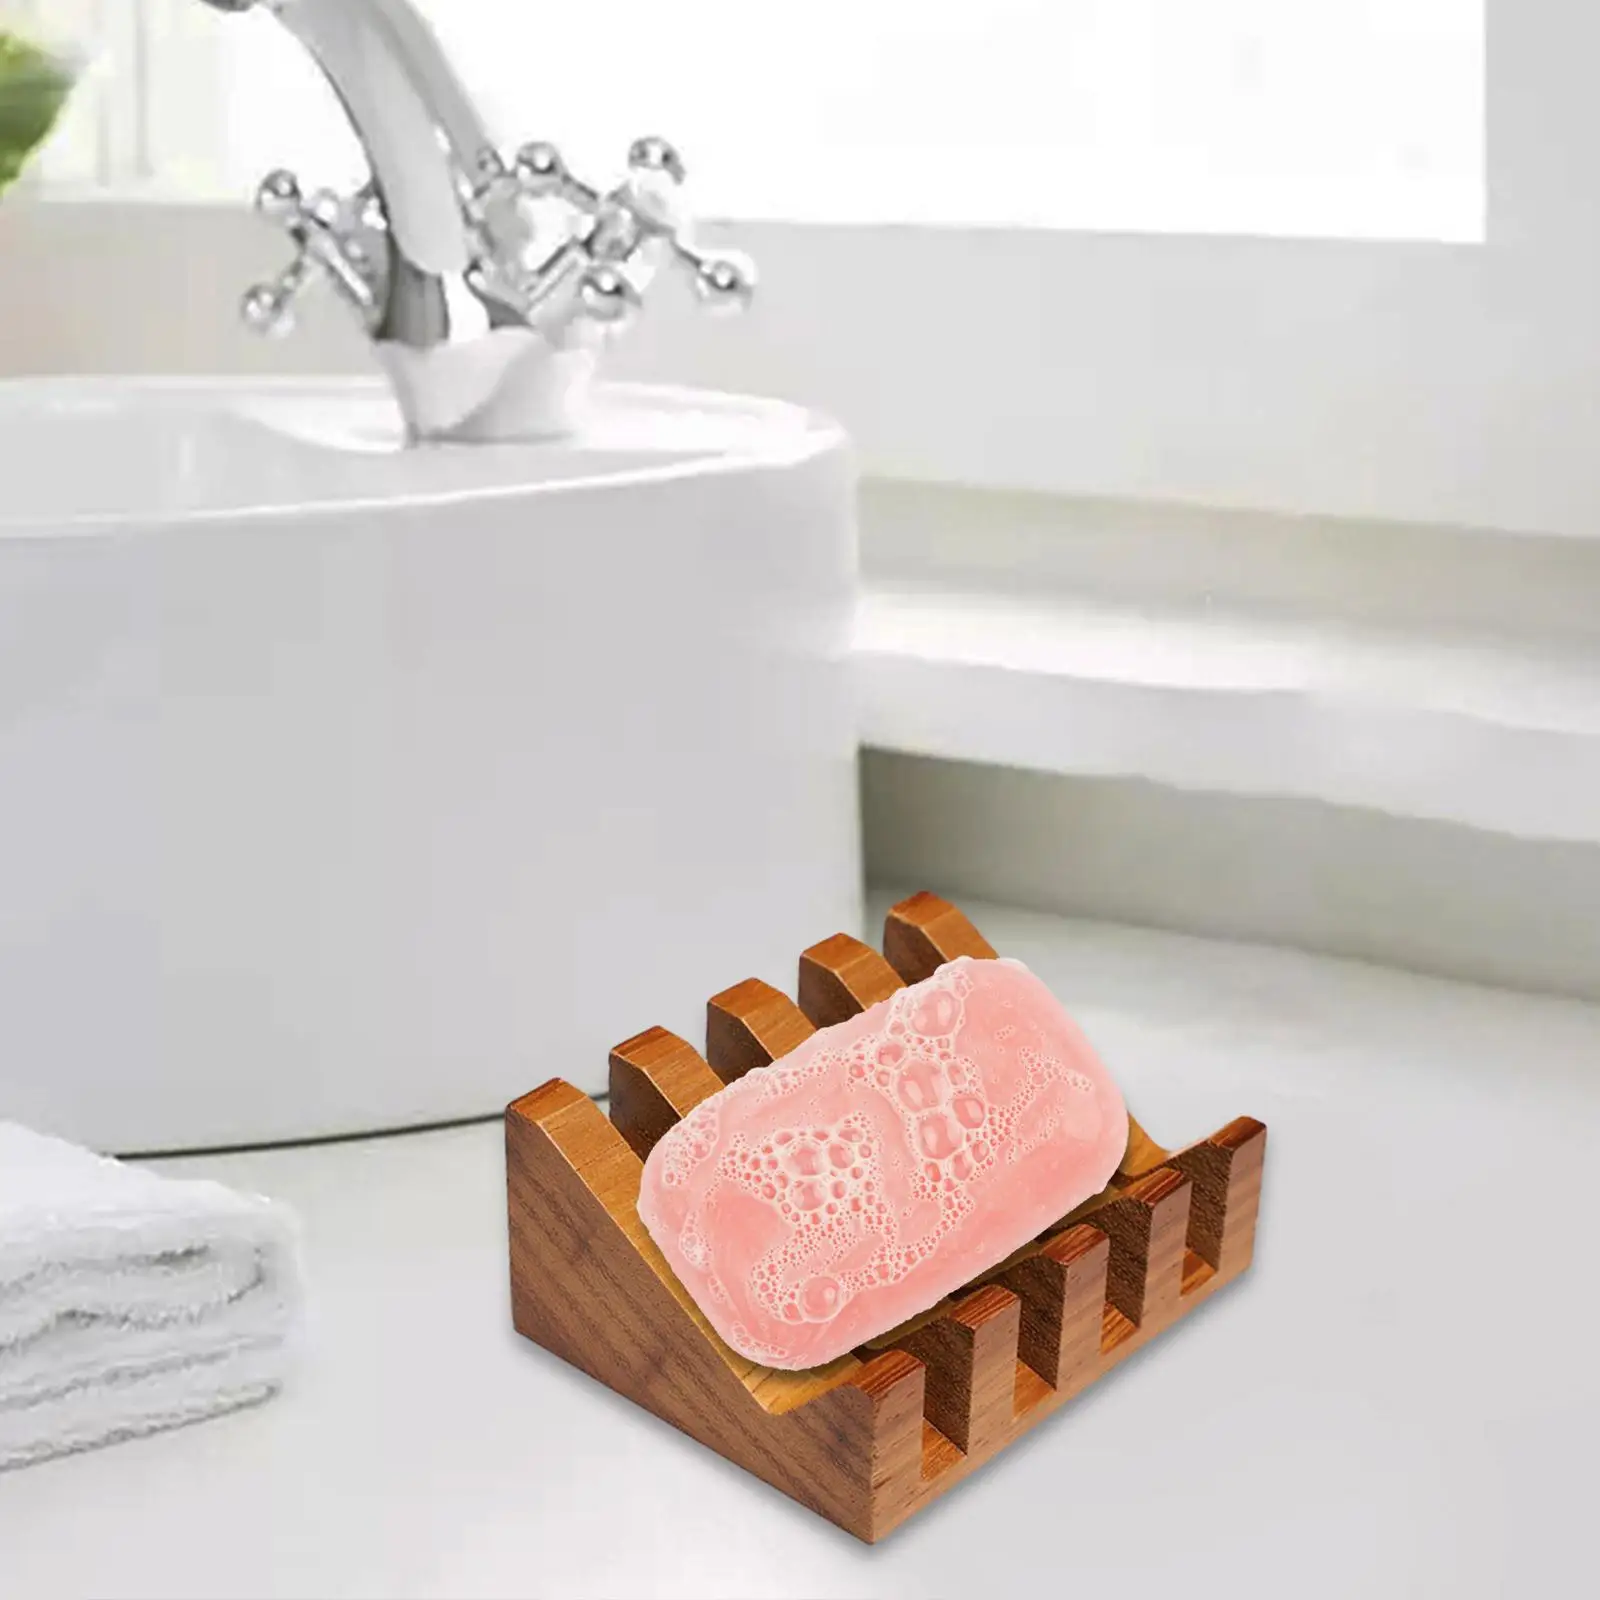 Wooden Soap Dish Home Decor Soap Tray Tabletop Self Draining Soap Dish Soap Bar Holder for Shower Bathroom Bathtub Sink Kitchen